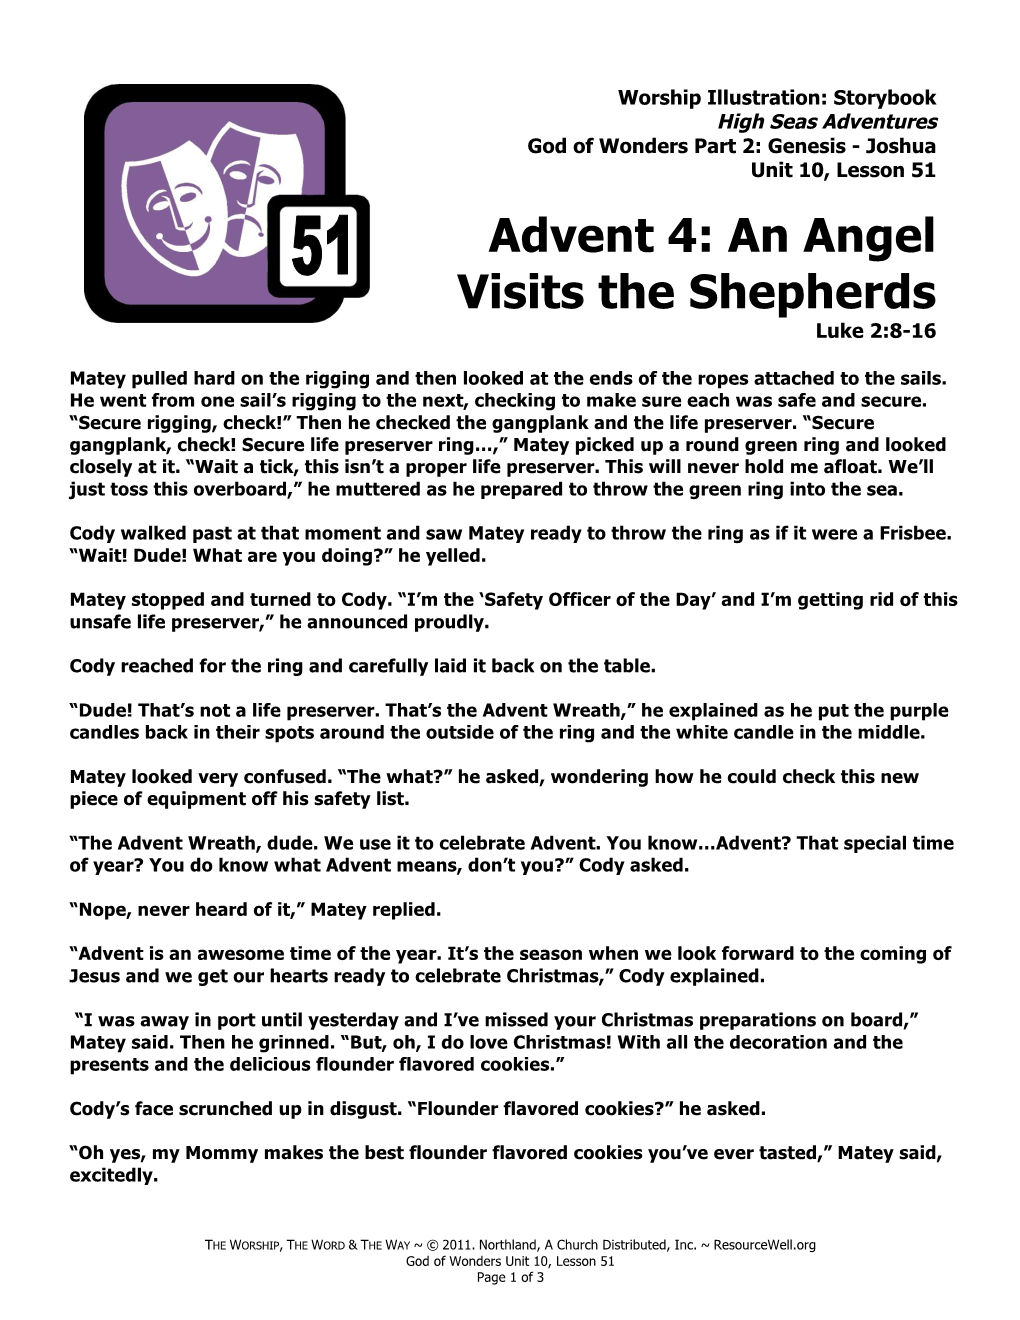 Advent 4: an Angel Visits the Shepherds Luke 2:8-16